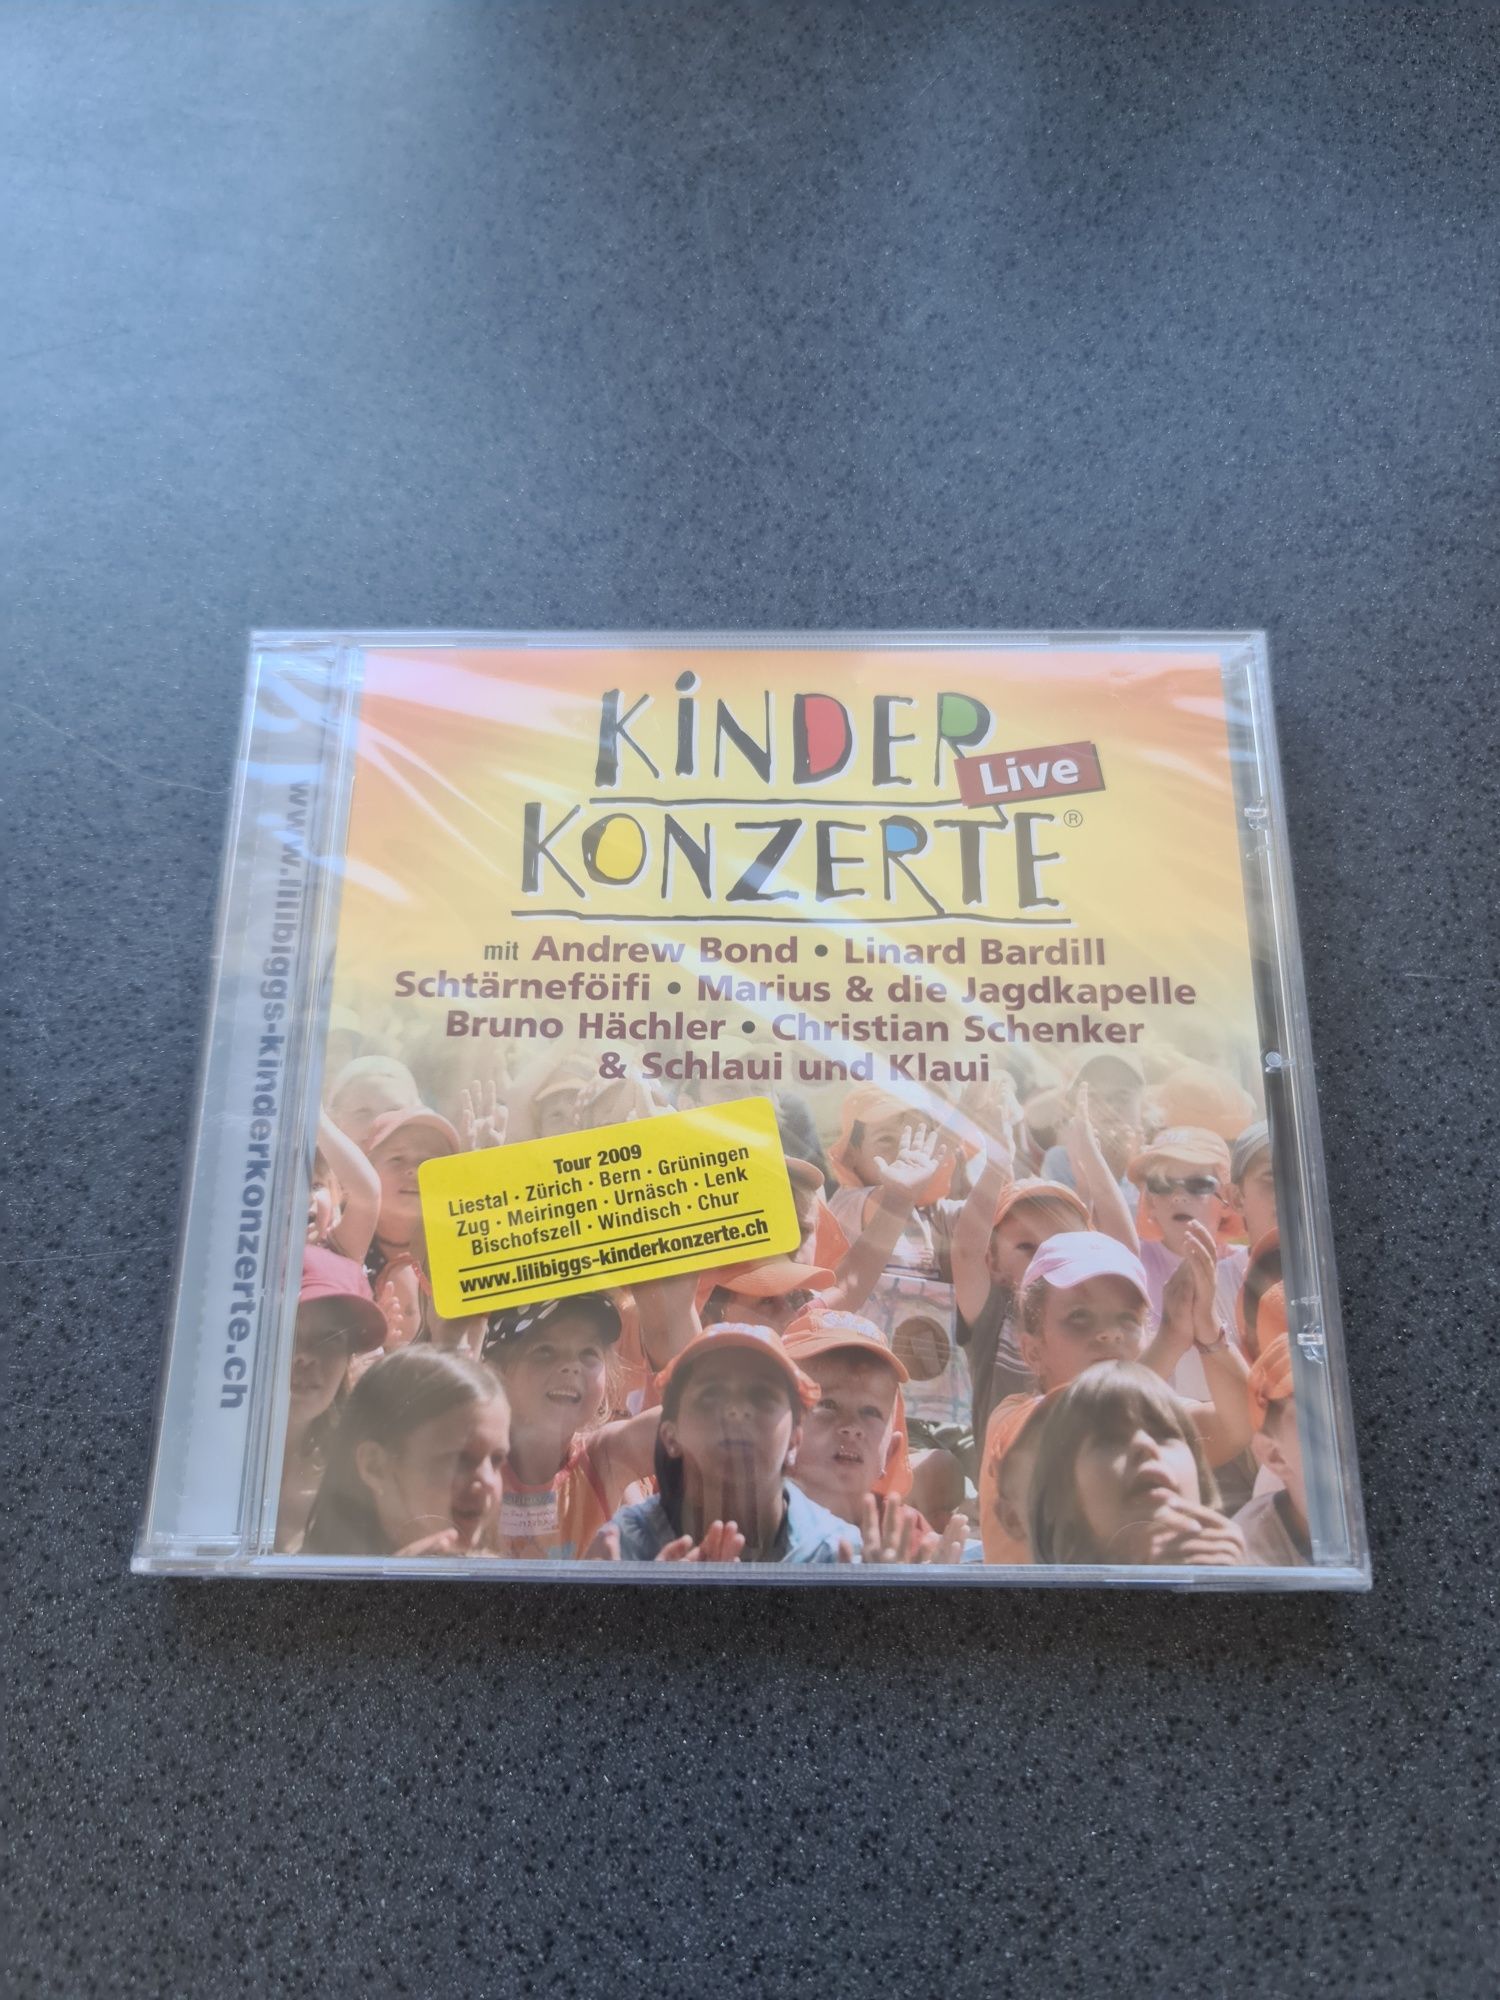 Nowa płyta CD Kinder Konzerte Live